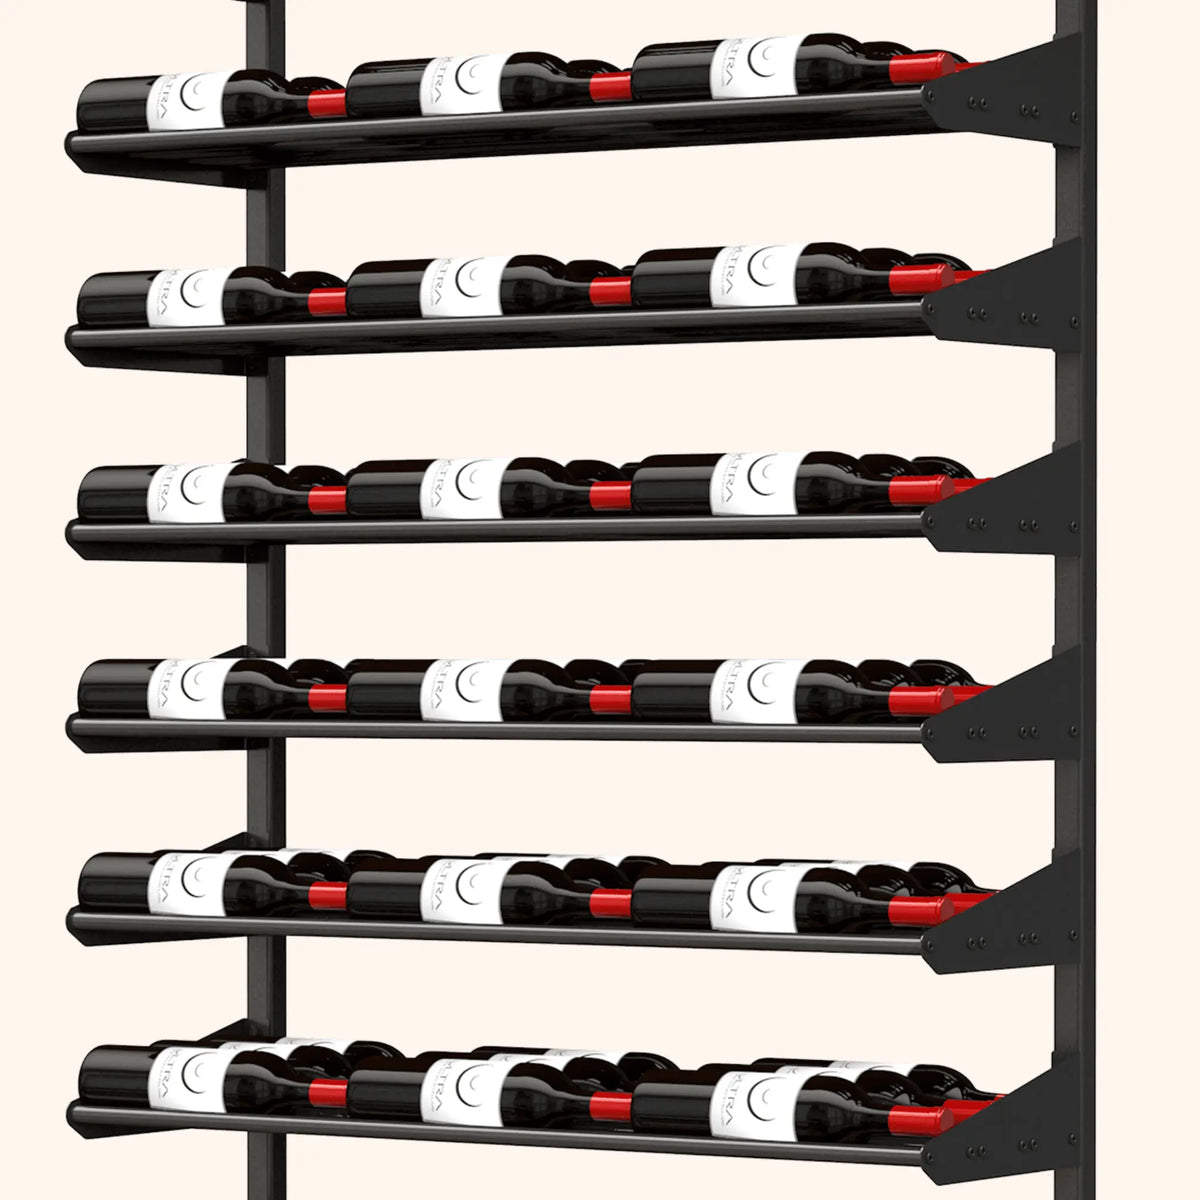 Ultra Wine Racks &amp; Cellars | Showcase Standard Horizontal Kits (66-99 Bottles) Ultra Wine Racks &amp; Cellars